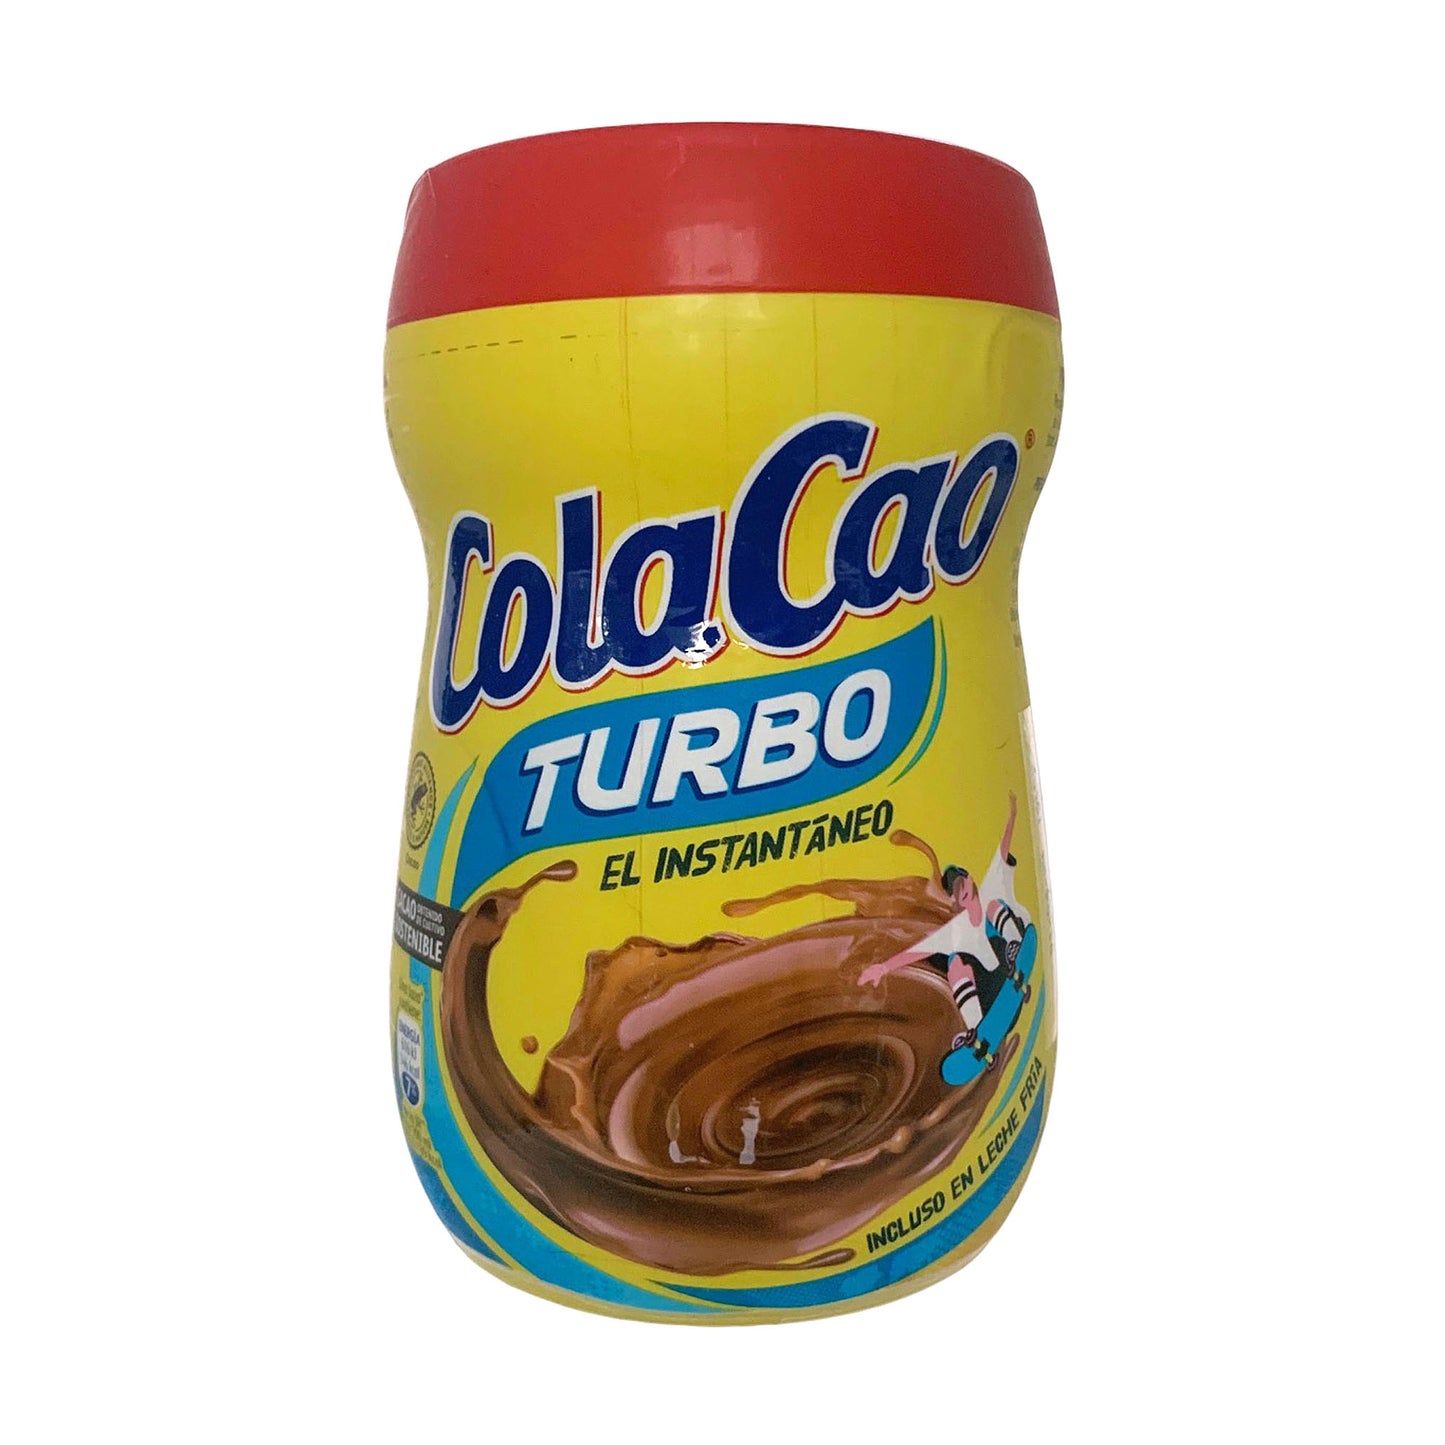 ColaCao Turbo Mezcla Instantánea de Bebida de Chocolate Frío o Caliente de España 375g